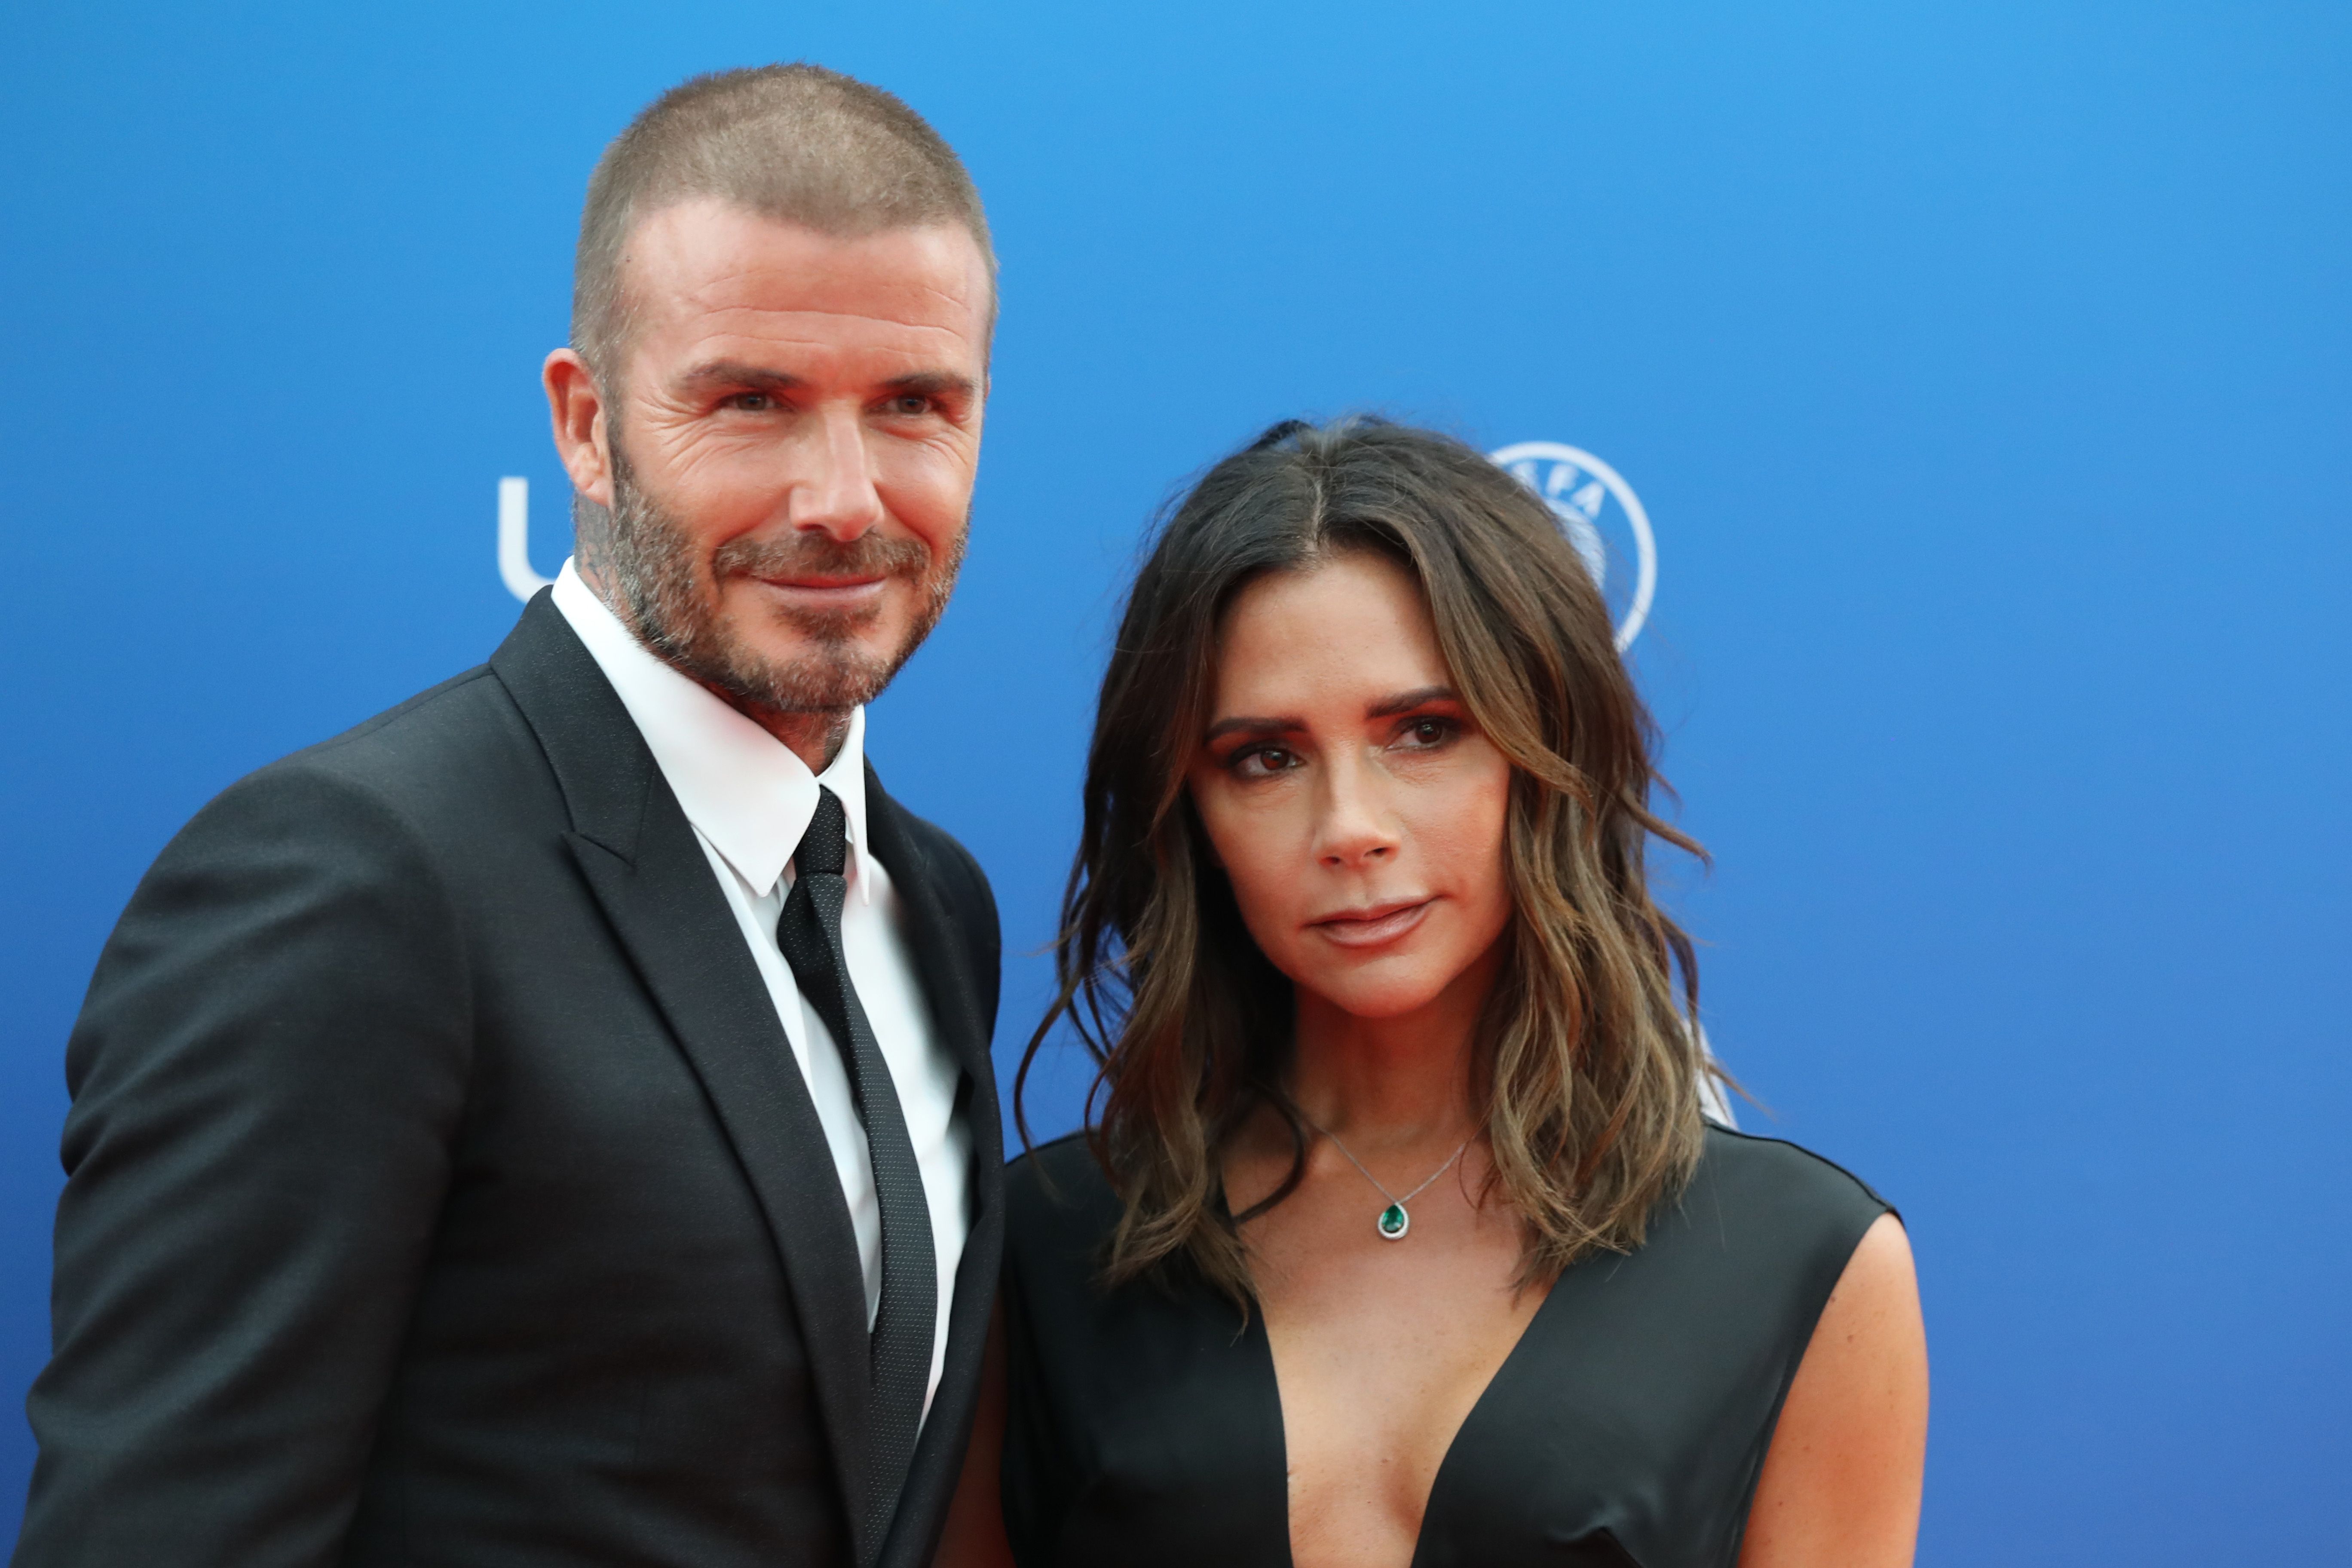 Victoria Beckham Wore a Three-Piece Suit on a Date With David Beckham